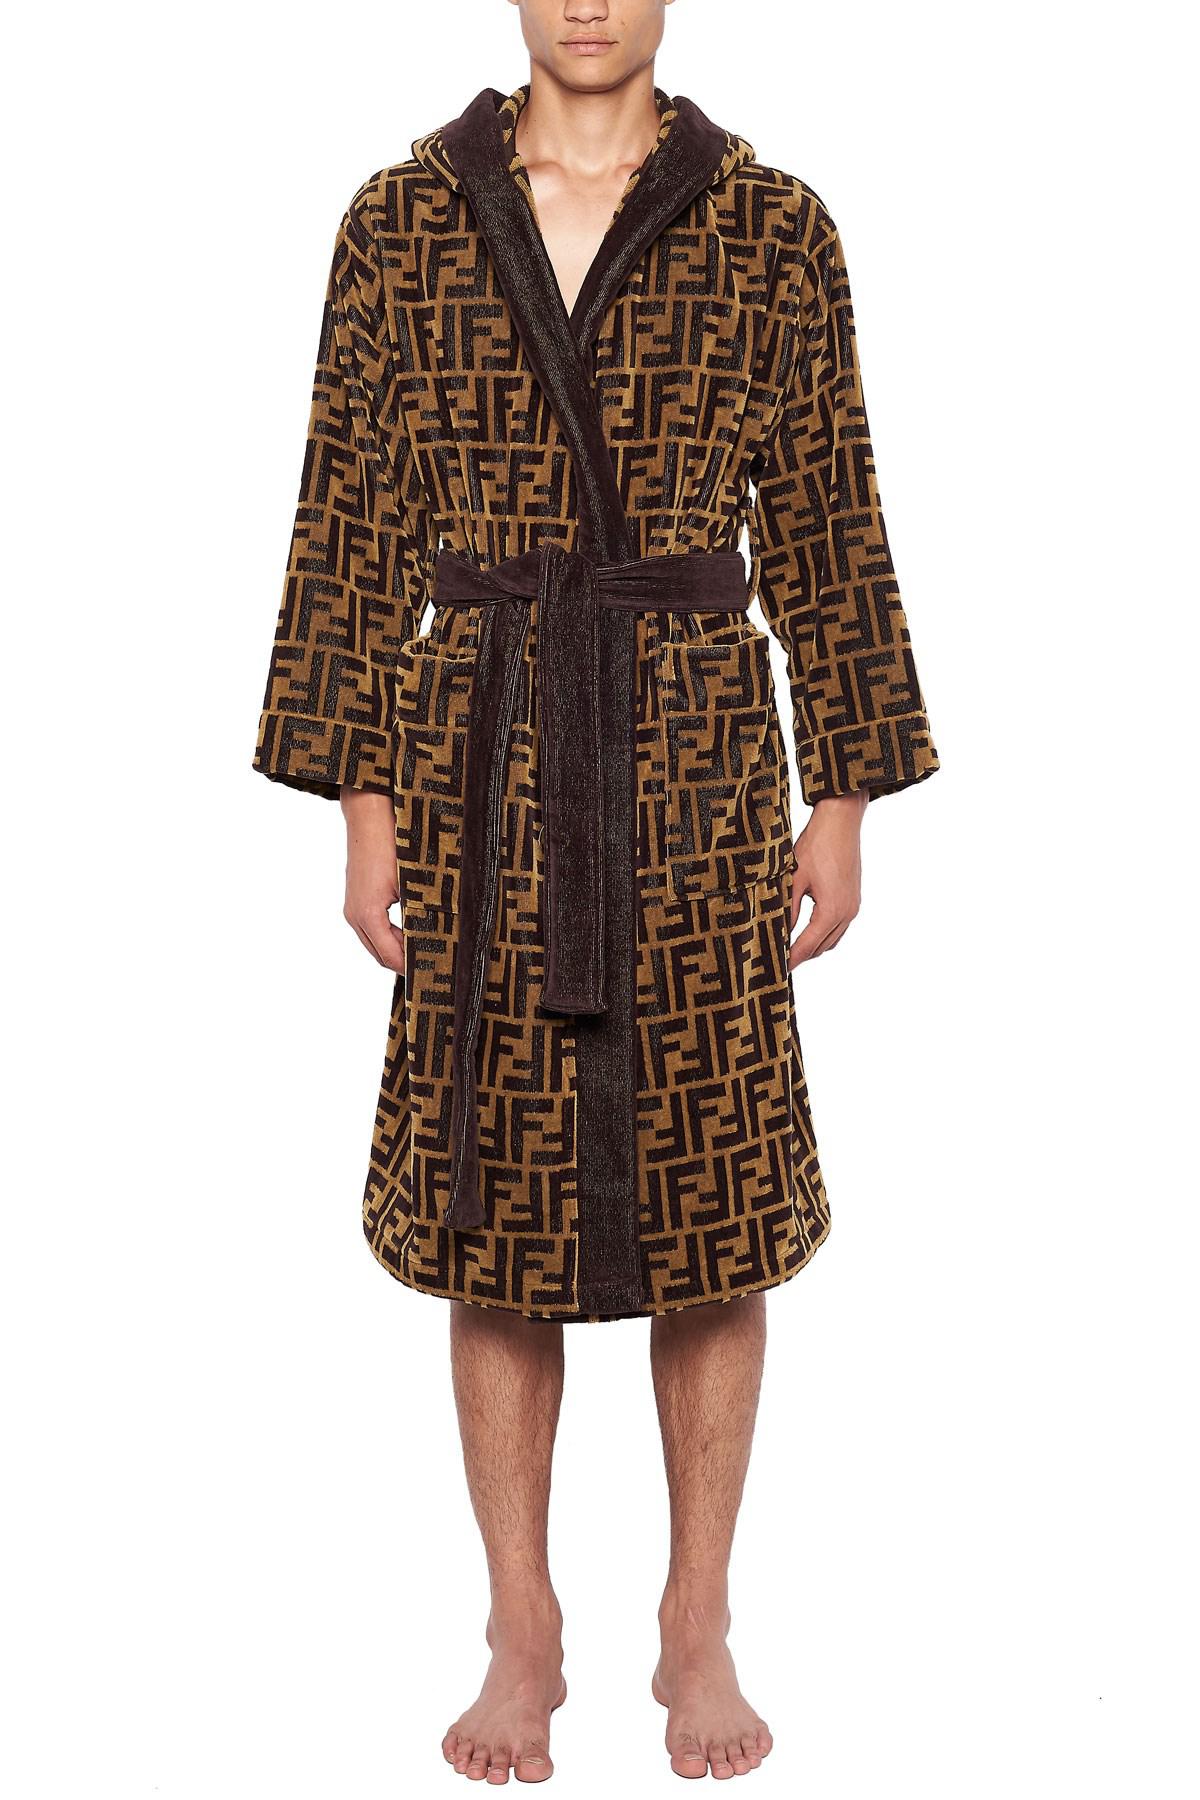 Fendi Jacquard Ff Logo Robe in Brown for Men - Lyst